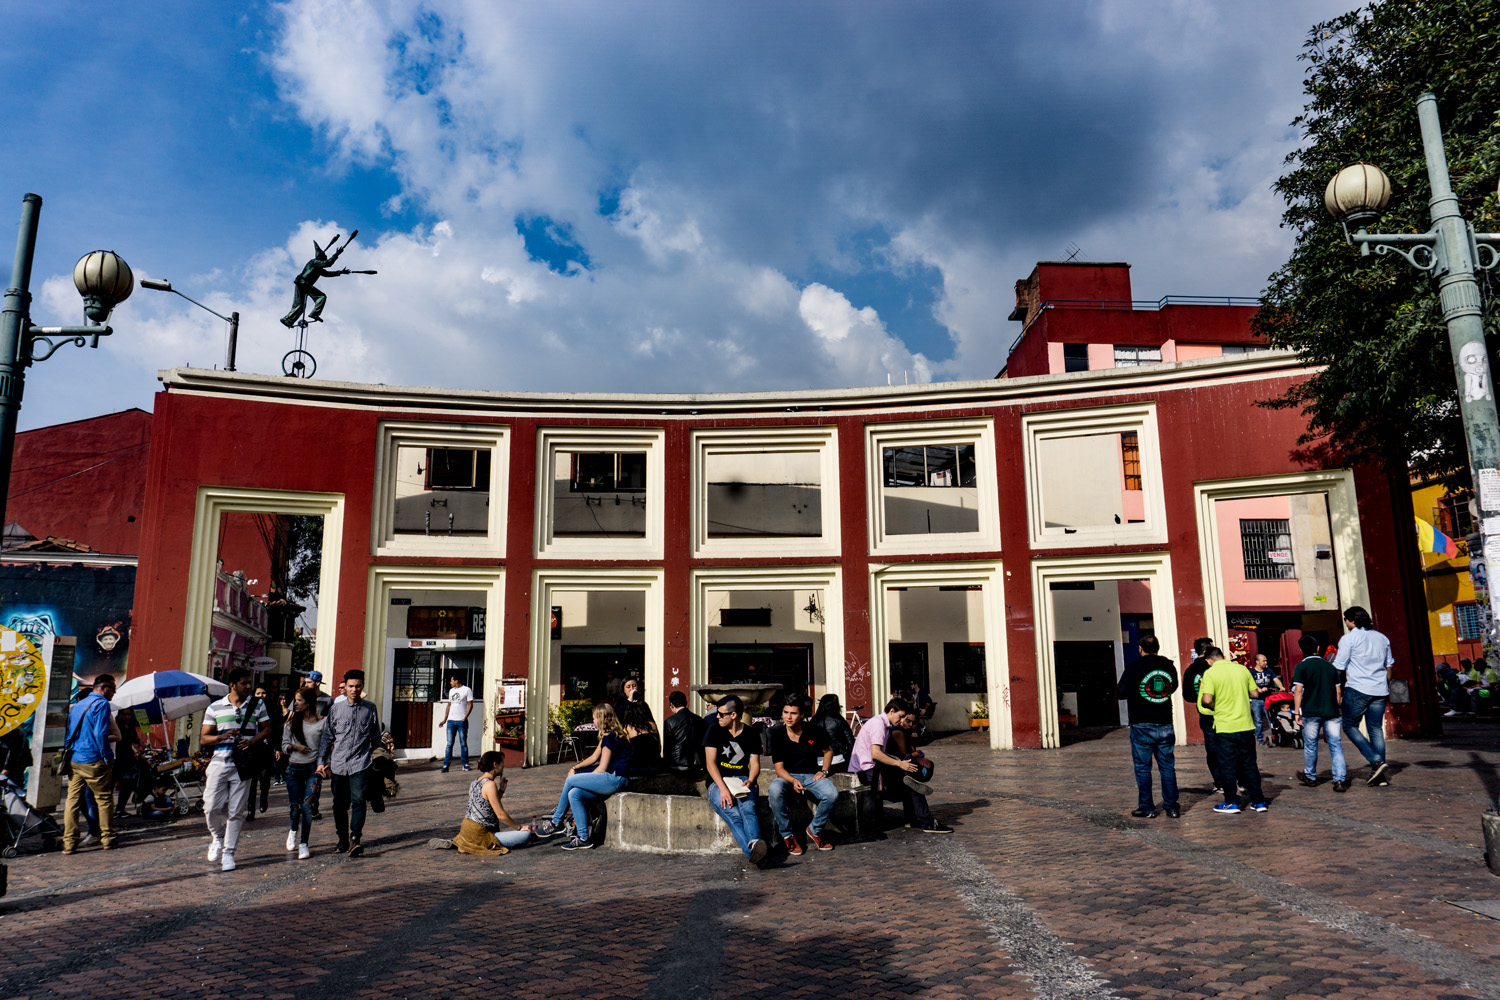 Chorro de Quevedo, Plaza in Candelaria district, Bogotá.